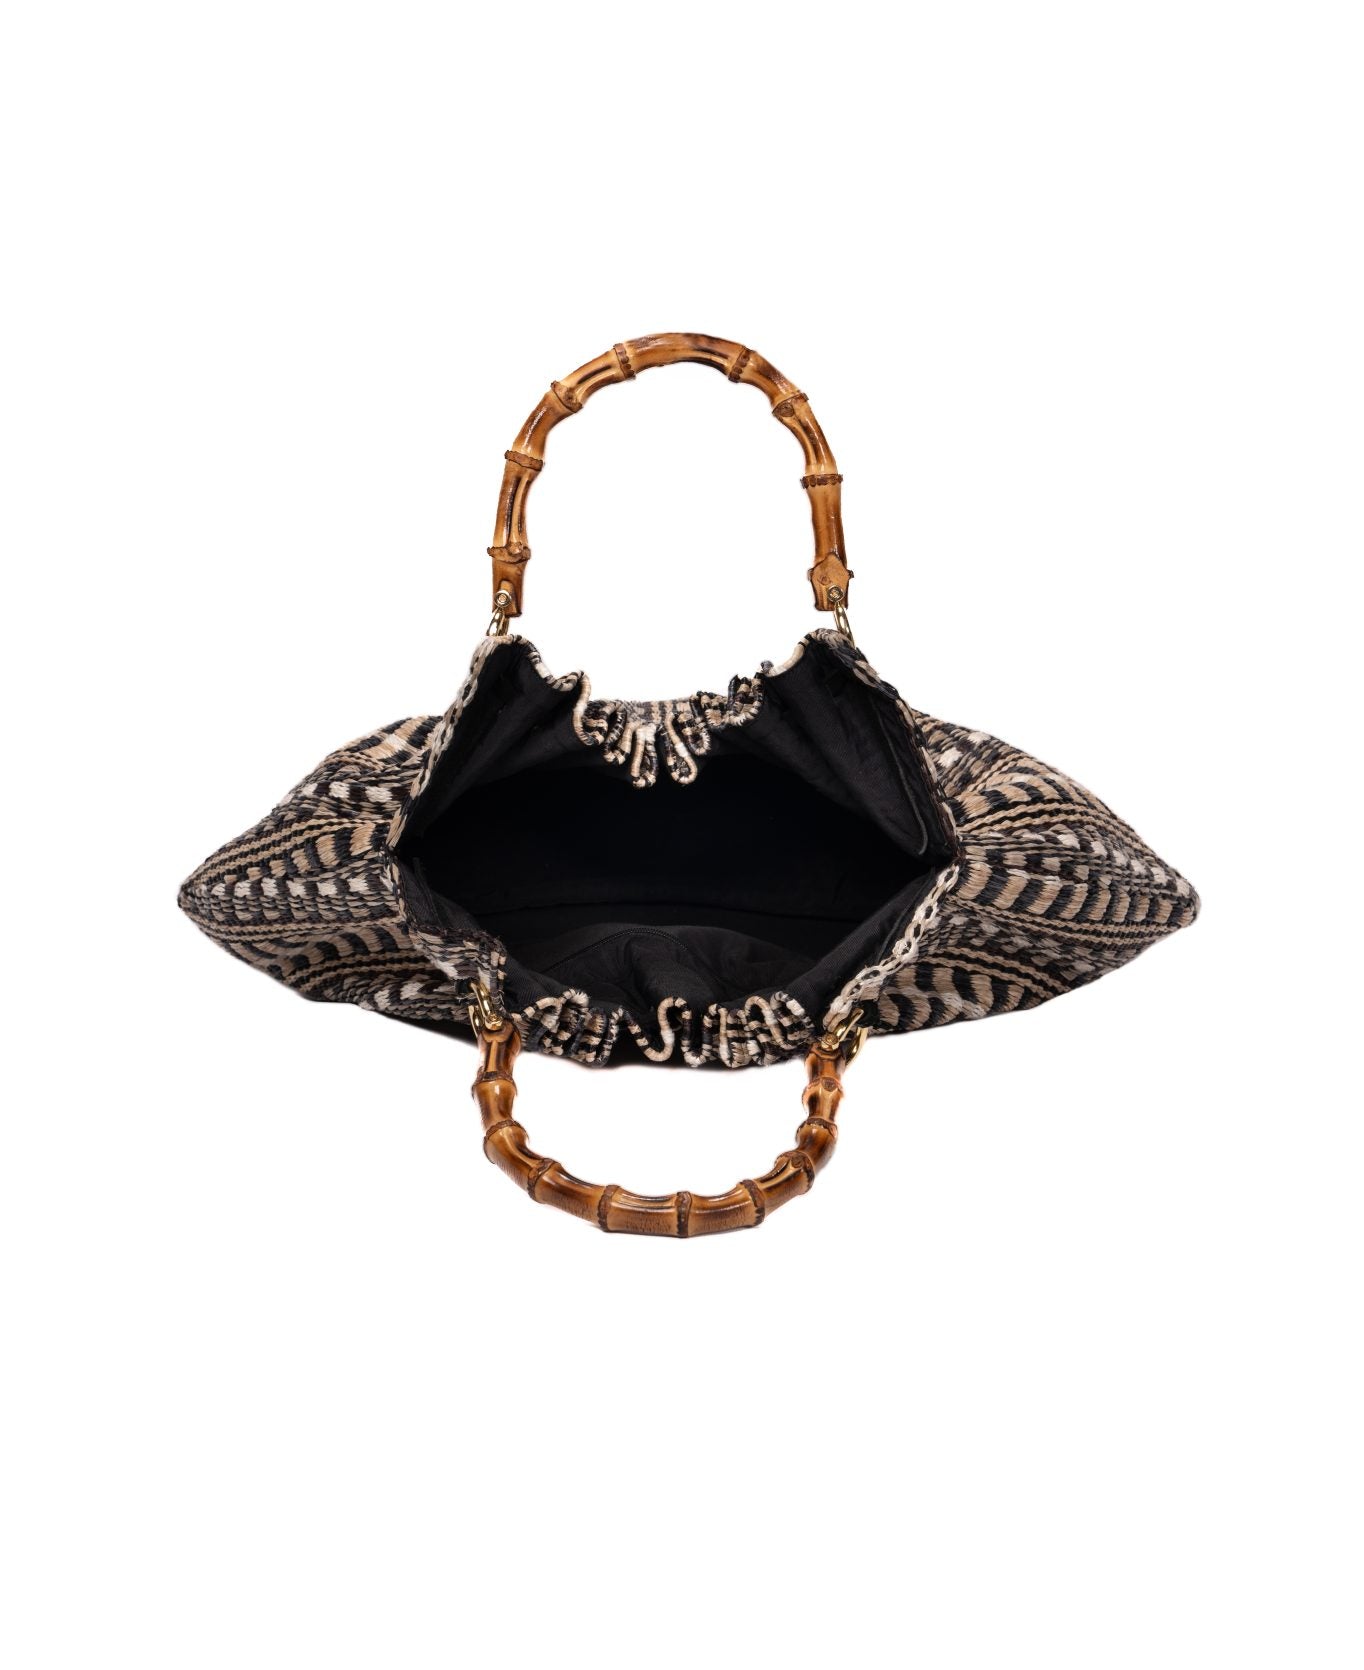 Italian raffia bag with bamboo handles, statement piece with Aztec print, large black raffia bag, Italian design fashion statement, intricate patterned handbag